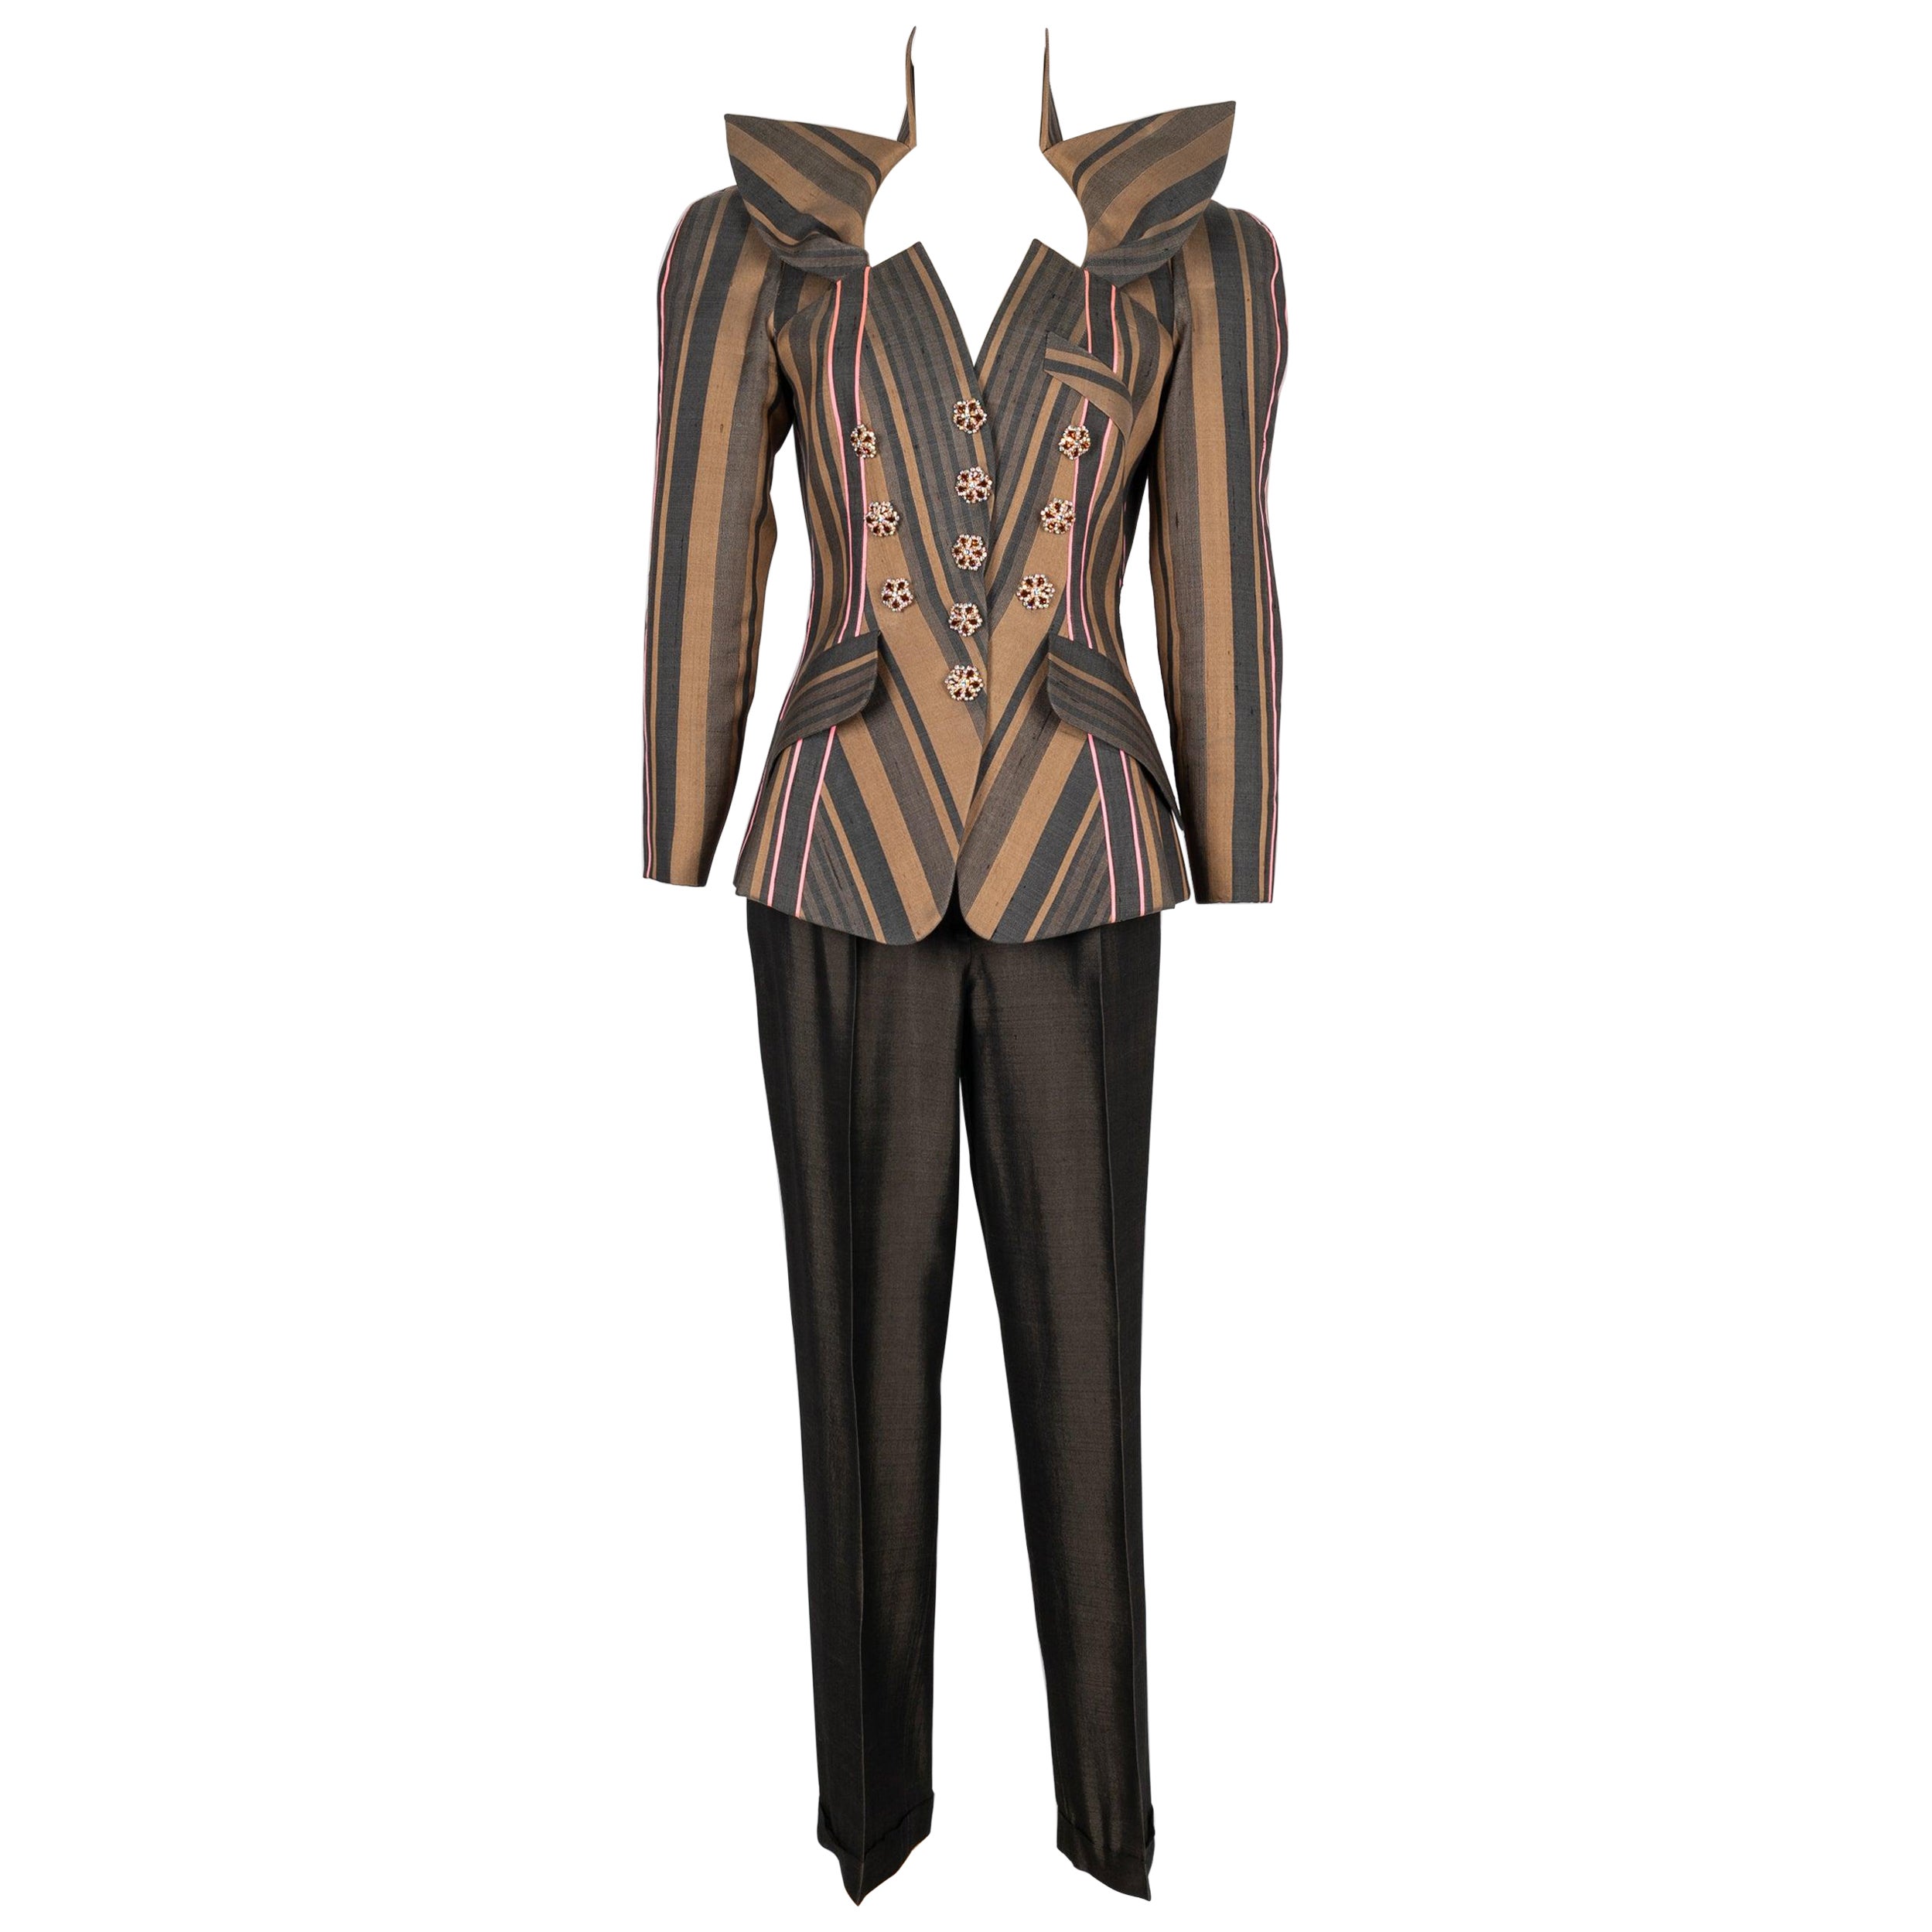 Christian Lacroix Suit Set of Pants and Jackete Haute Couture